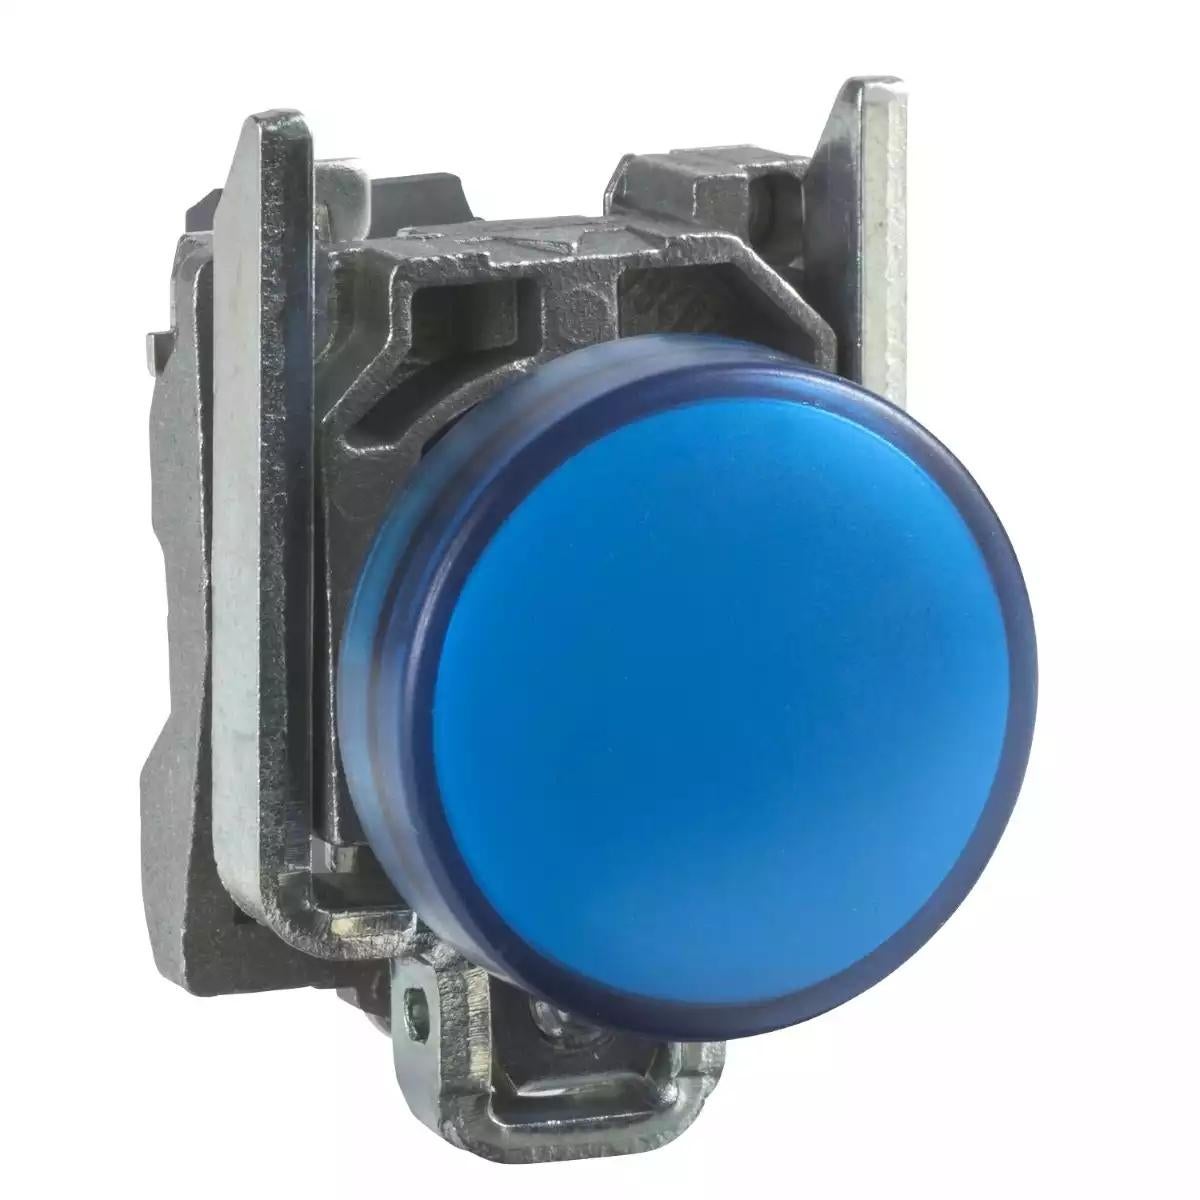 Pilot light, metal, blue, Ø22, plain lens with integral LED, 24 V AC/DC